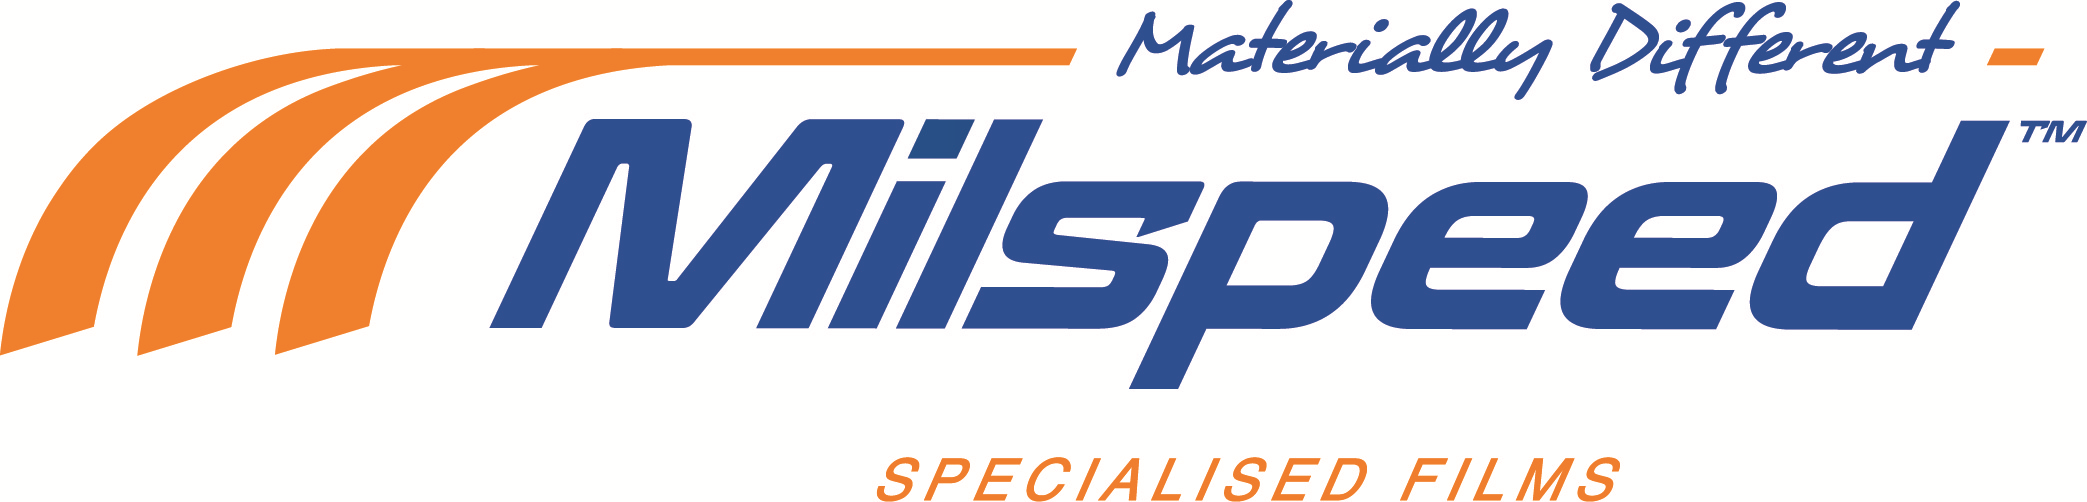 Milspeed Limited